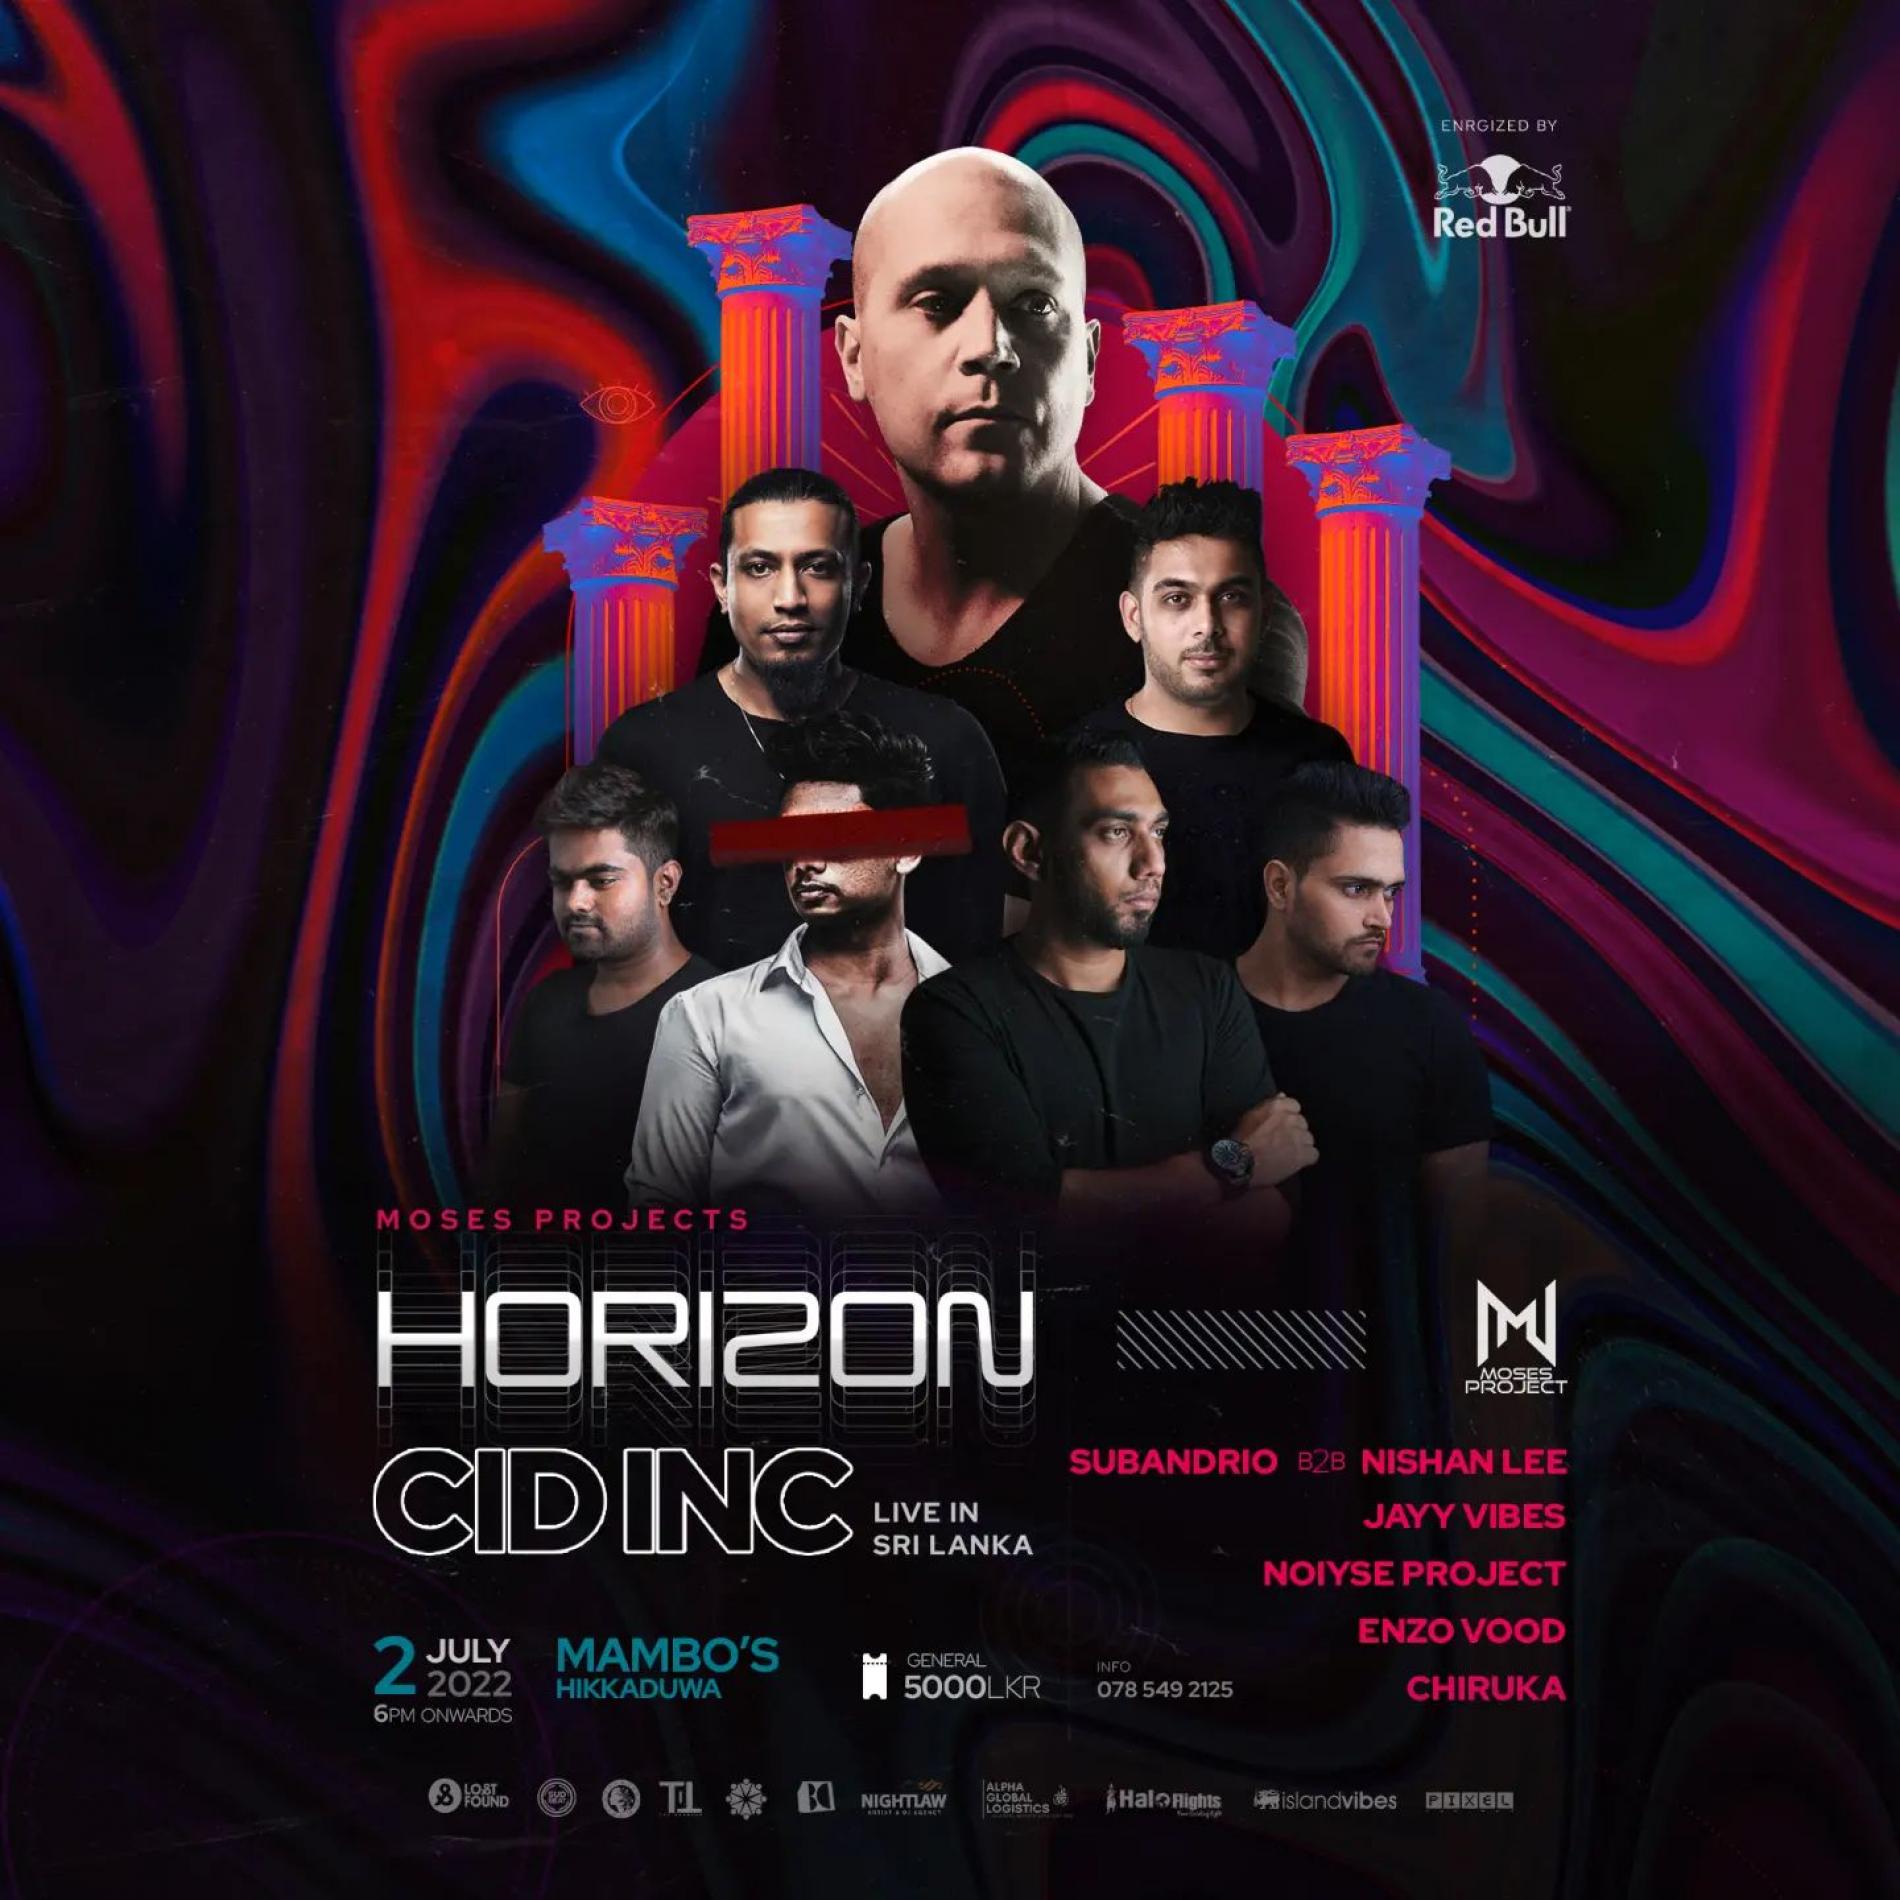 Horizon (CID INC Live In Sri Lanka)